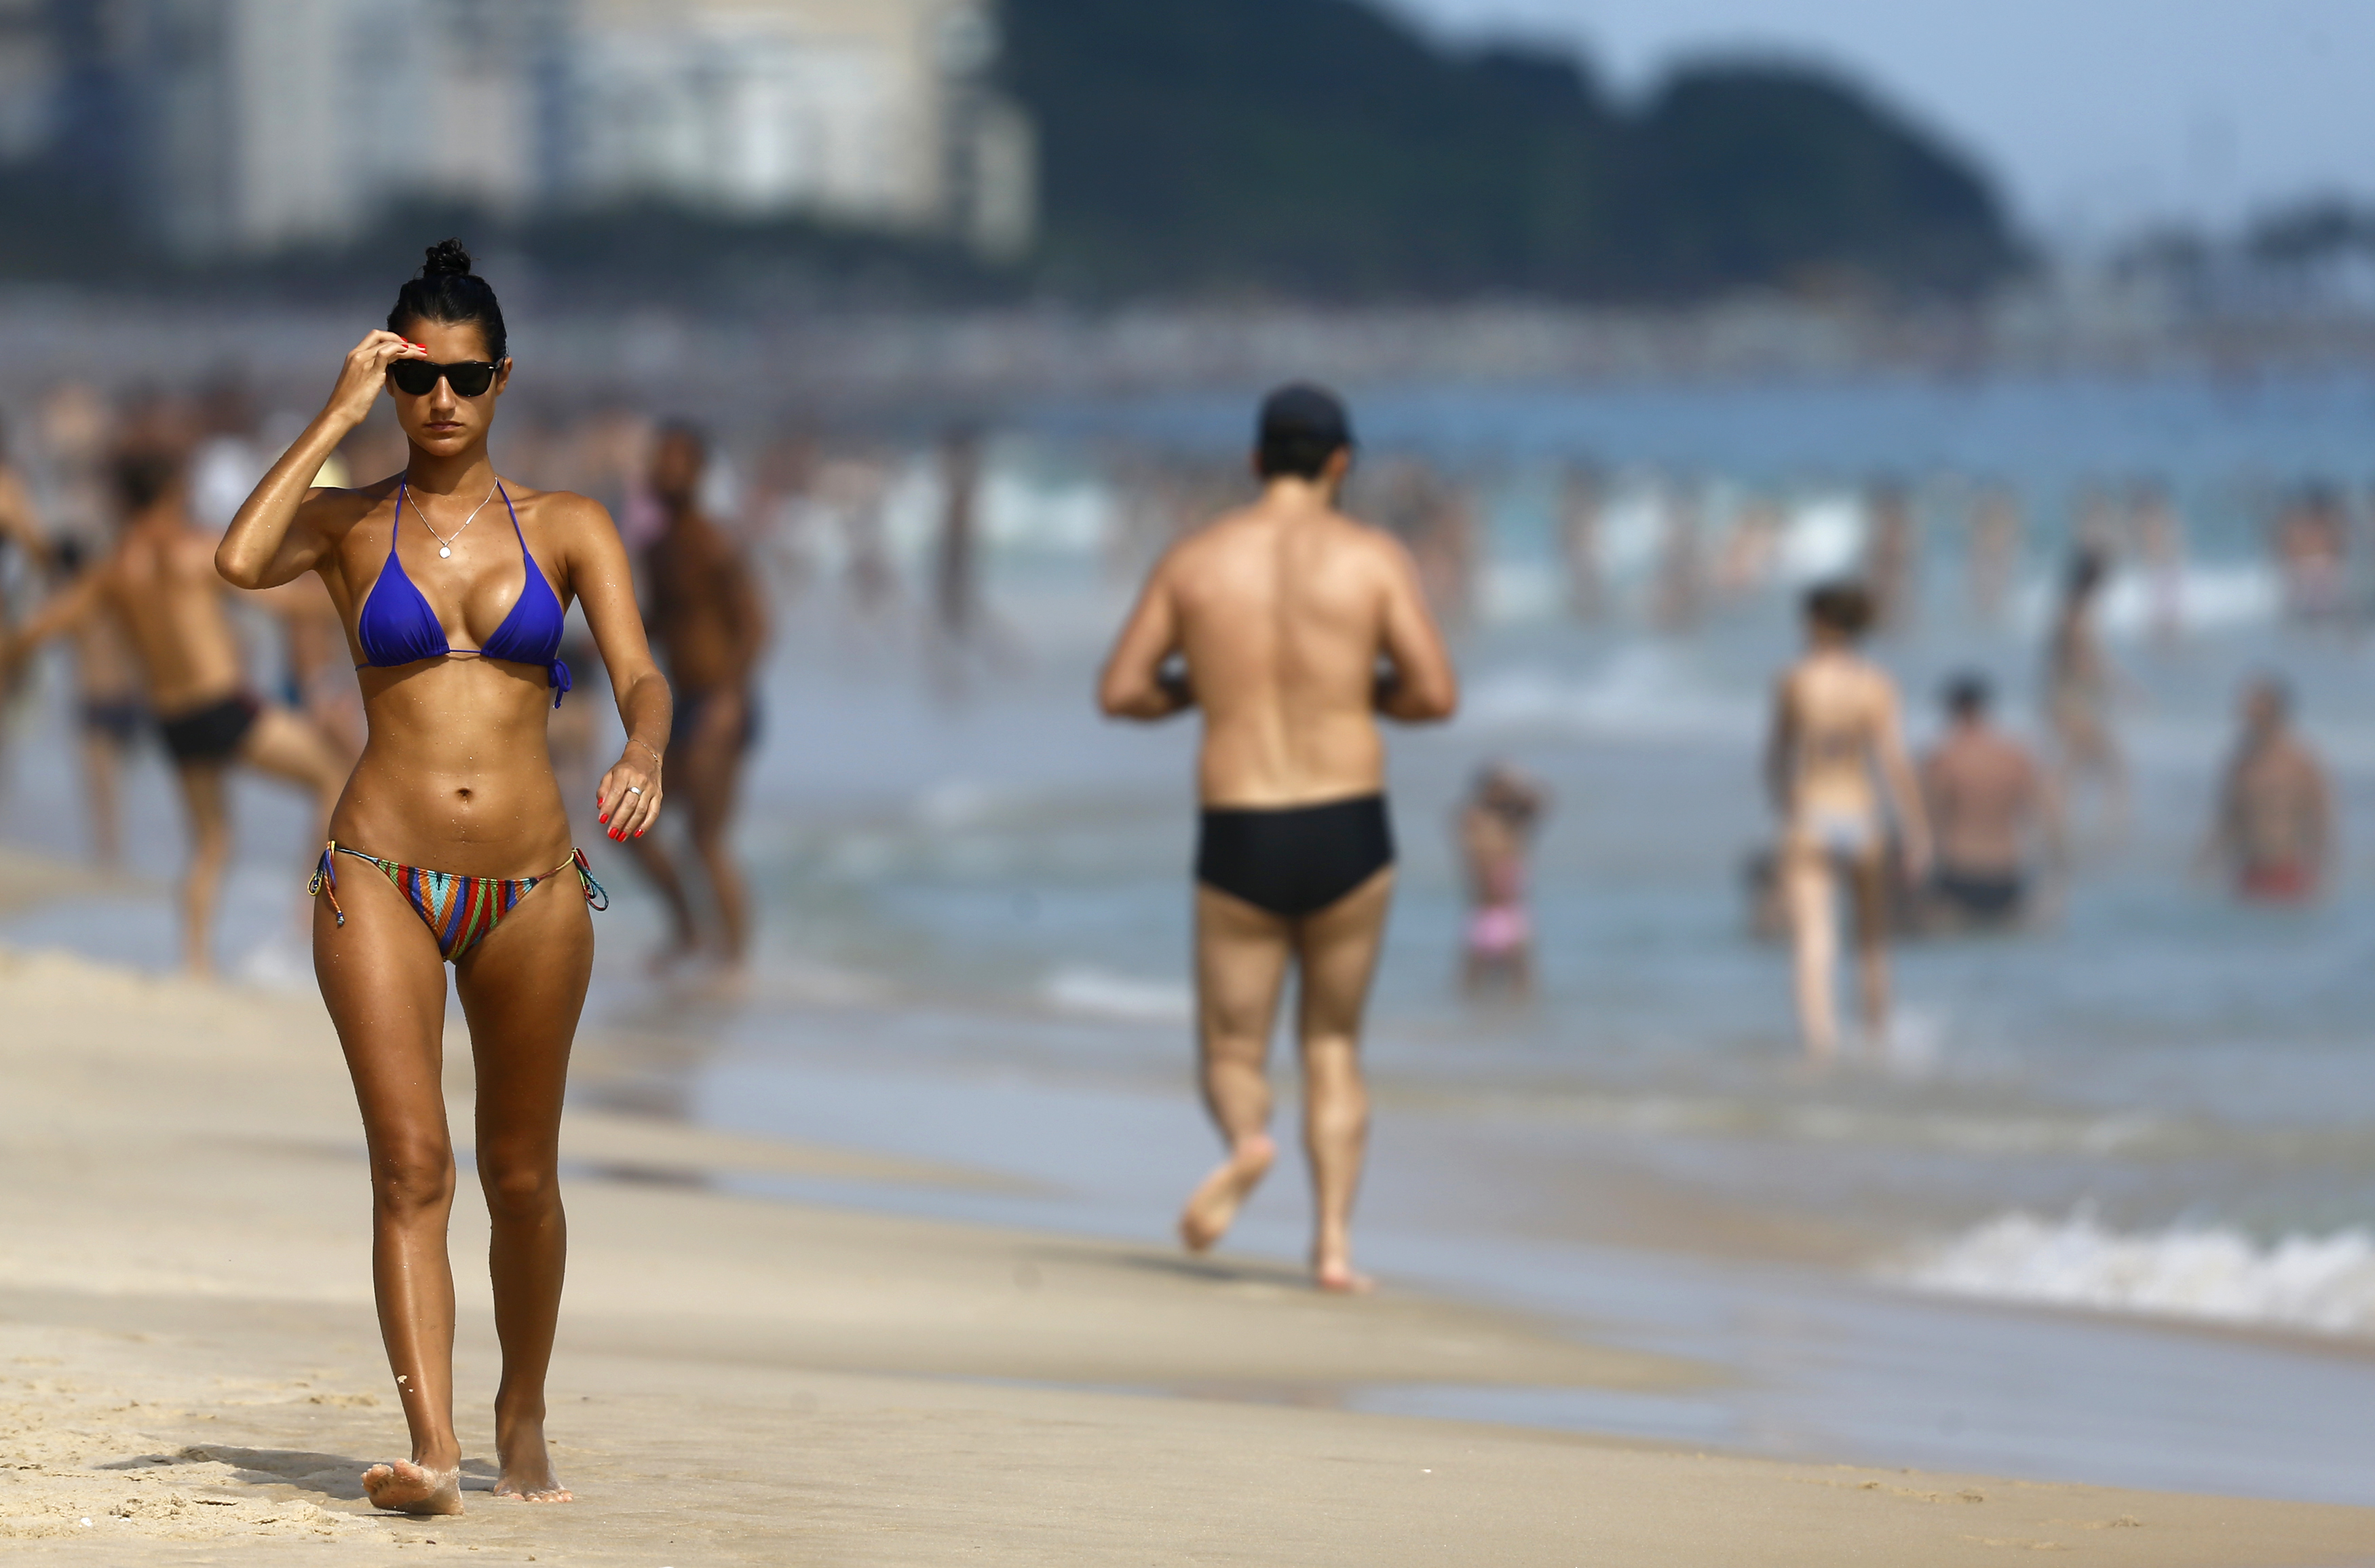 Rio Brazil Beach Girl Nudes - Rio beats the heat at the beach - Brazilians head to the ...